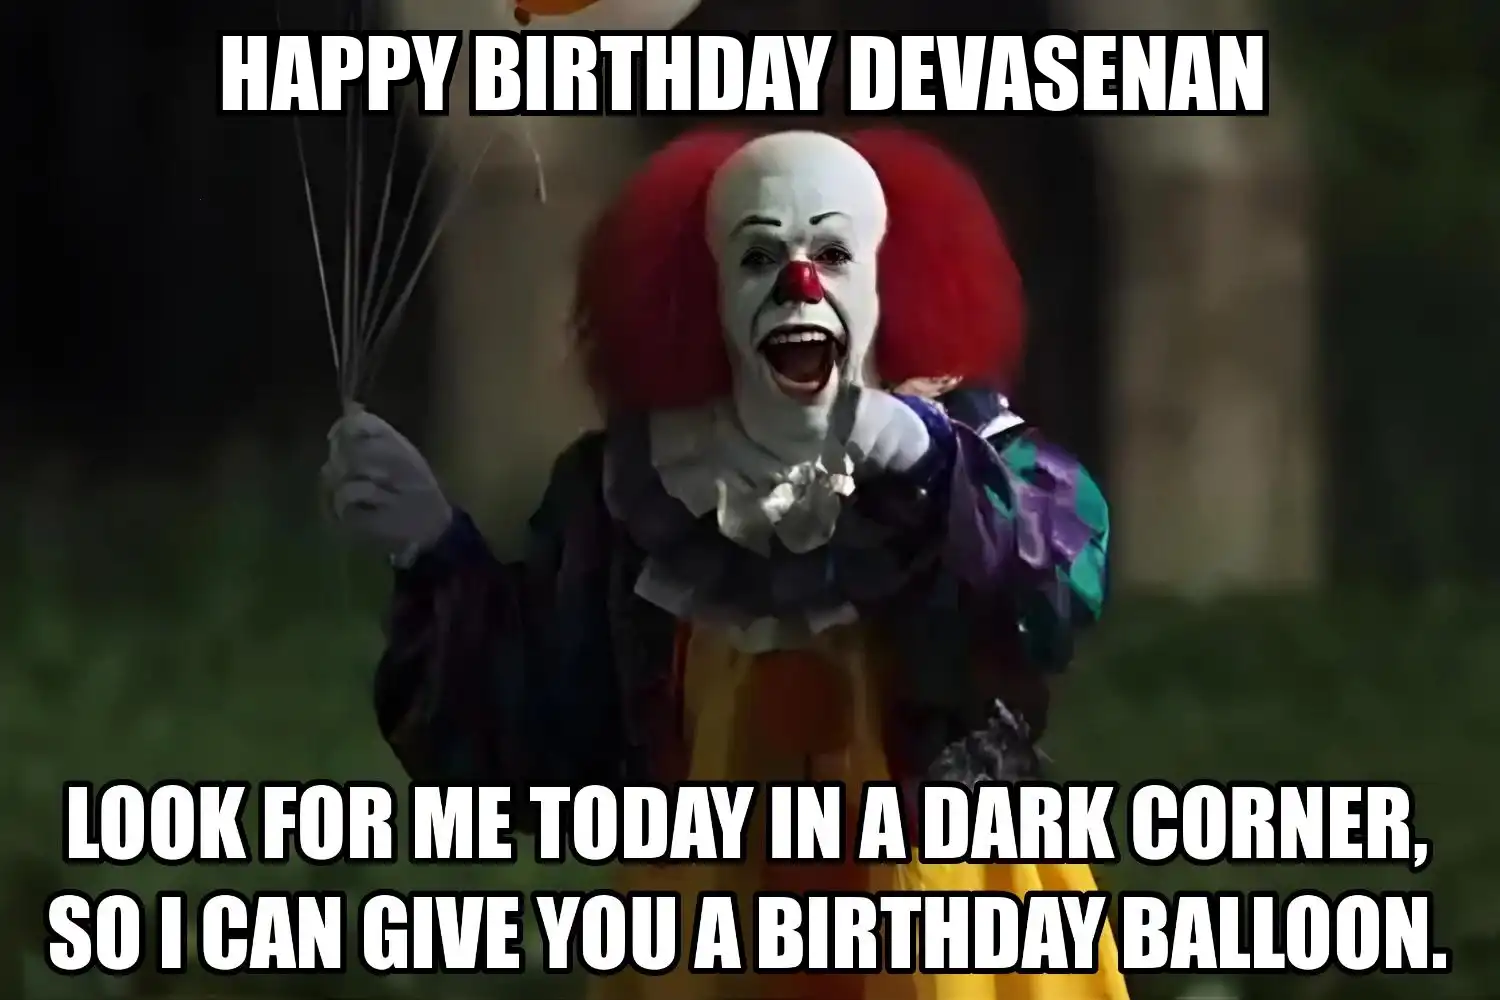 Happy Birthday Devasenan I Can Give You A Balloon Meme